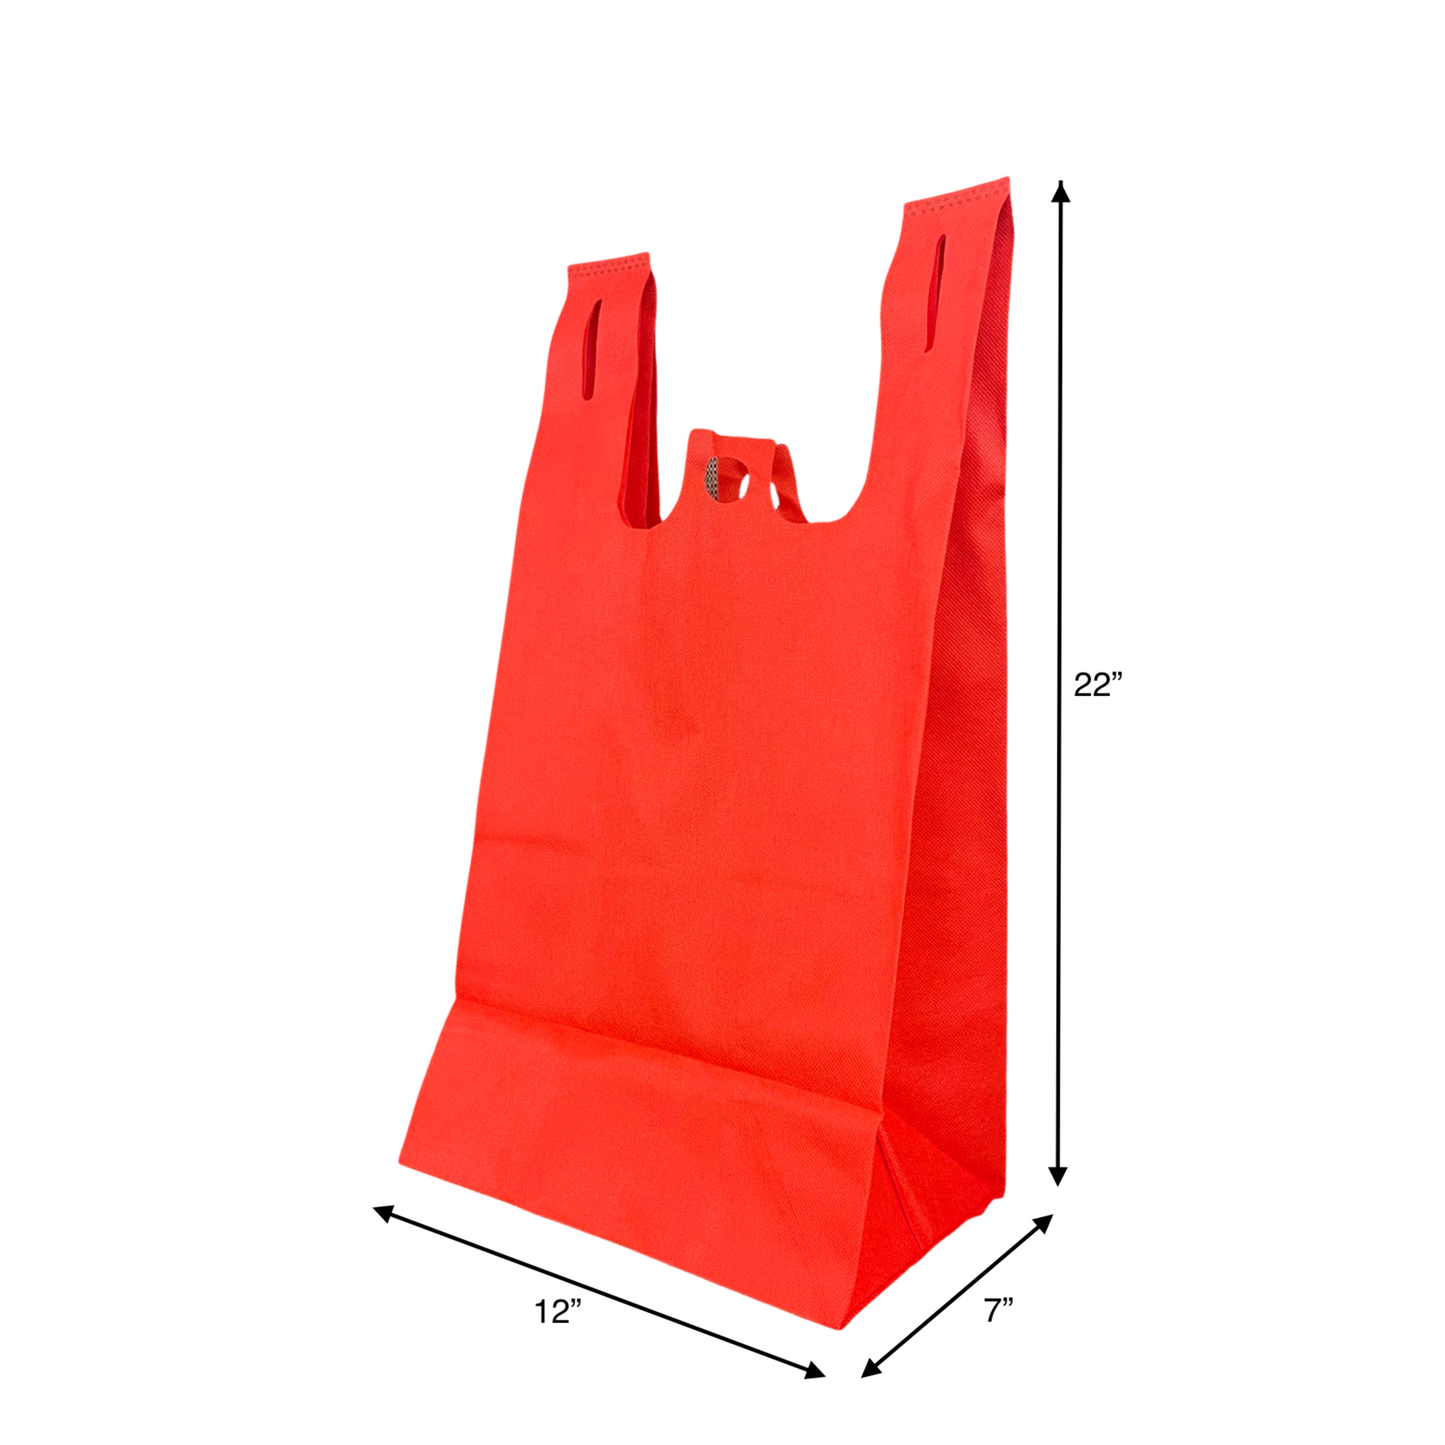 200pcs Non-Woven Reusable T-Shirt Bag 12x7x22x7 inches Red Shopping Bags Square Bottom; $0.44/bag